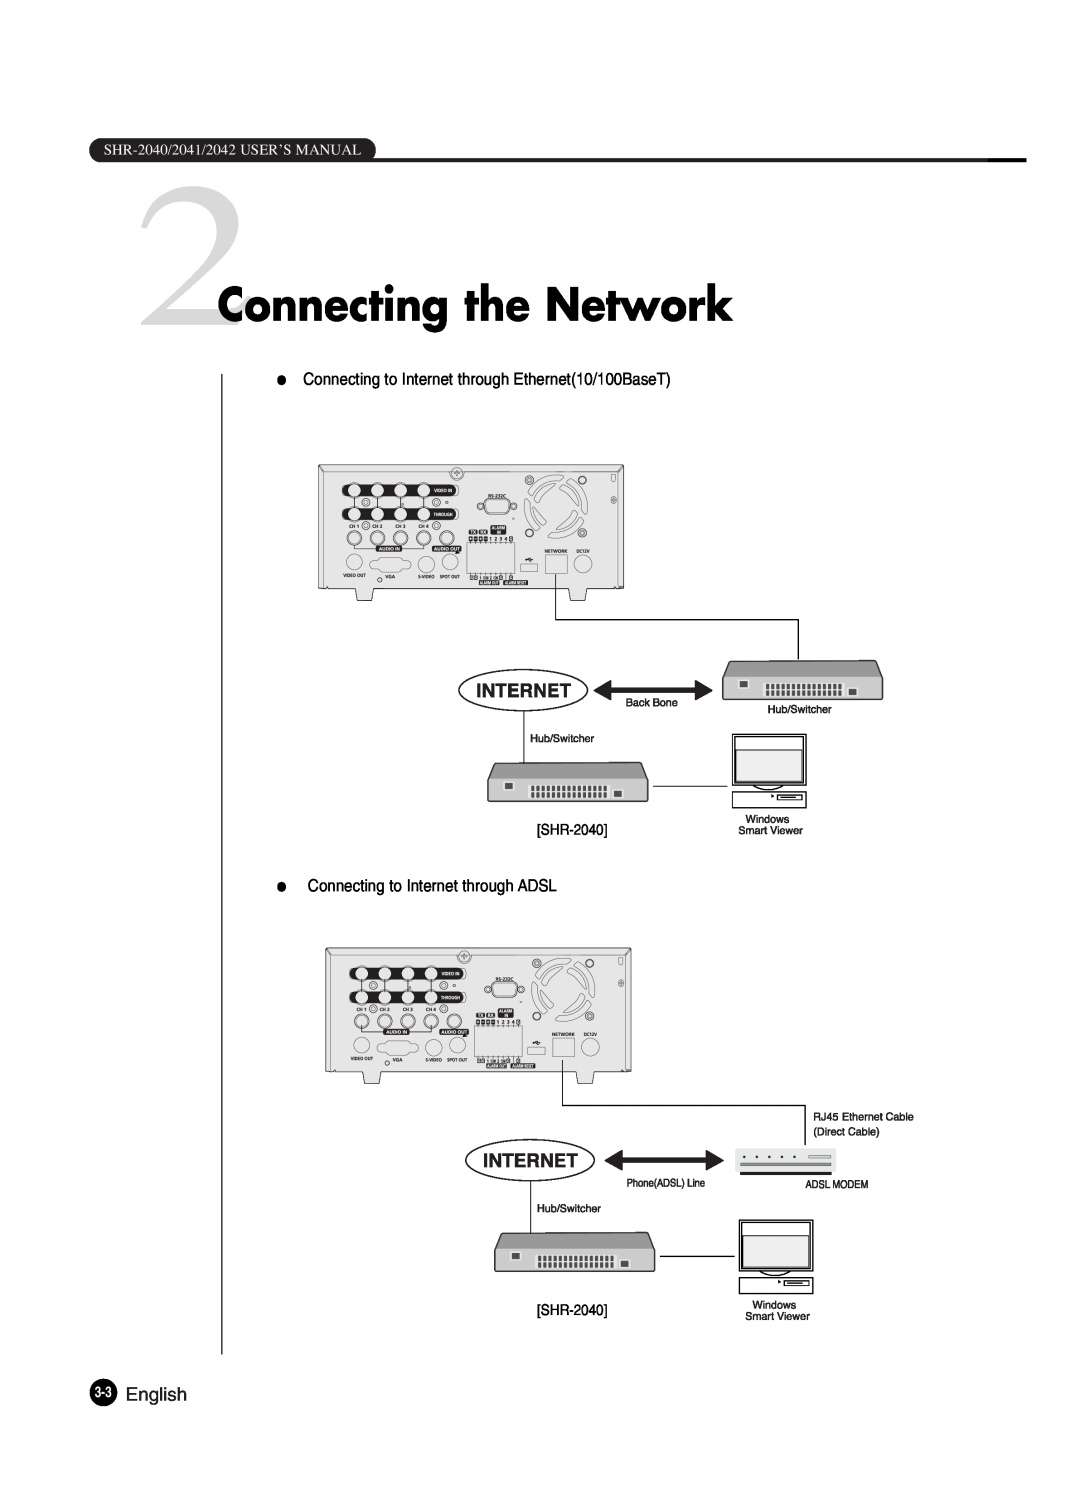 Samsung SHR-2042P250, SHR-2040P250 manual 2Connecting the Network, English, SHR-2040/2041/2042 USER’S MANUAL 